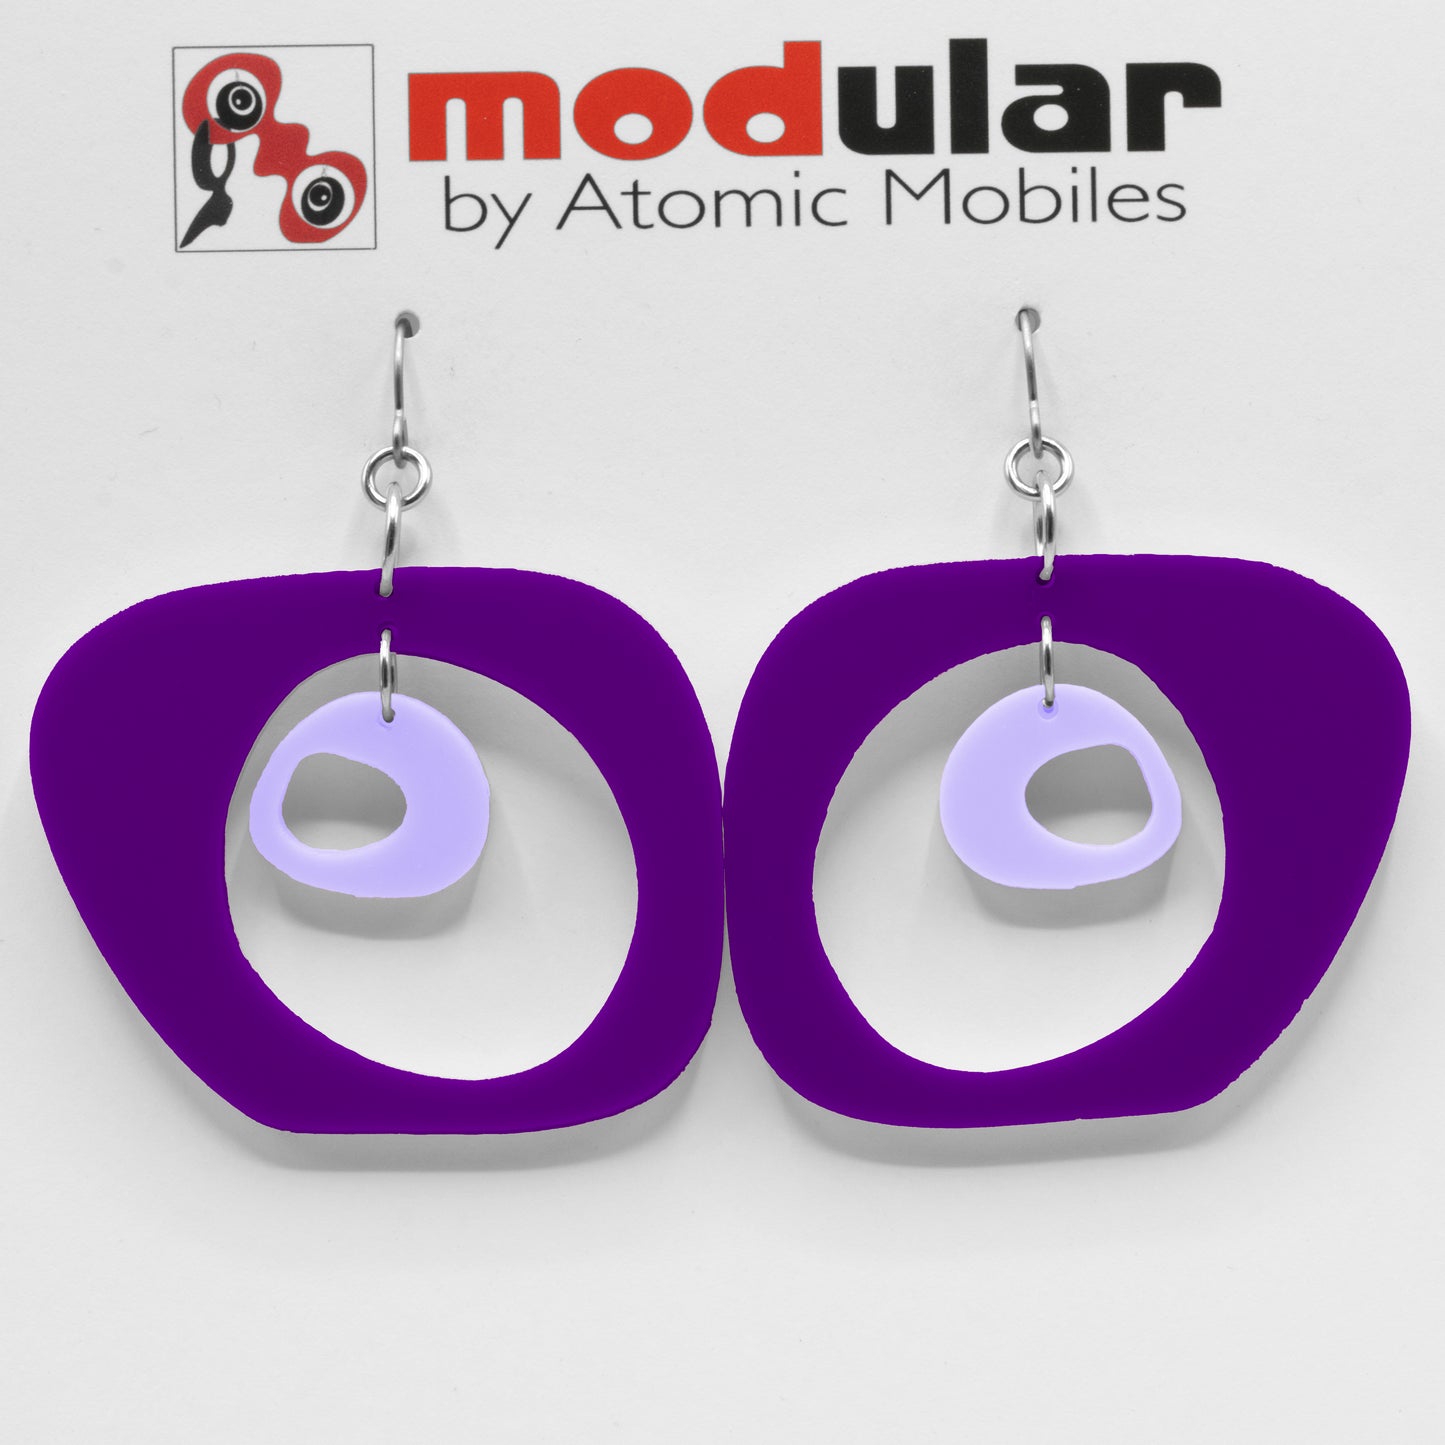 MODular Earrings - Paris Statement Earrings in Purple by AtomicMobiles.com - retro era inspired mod handmade jewelry